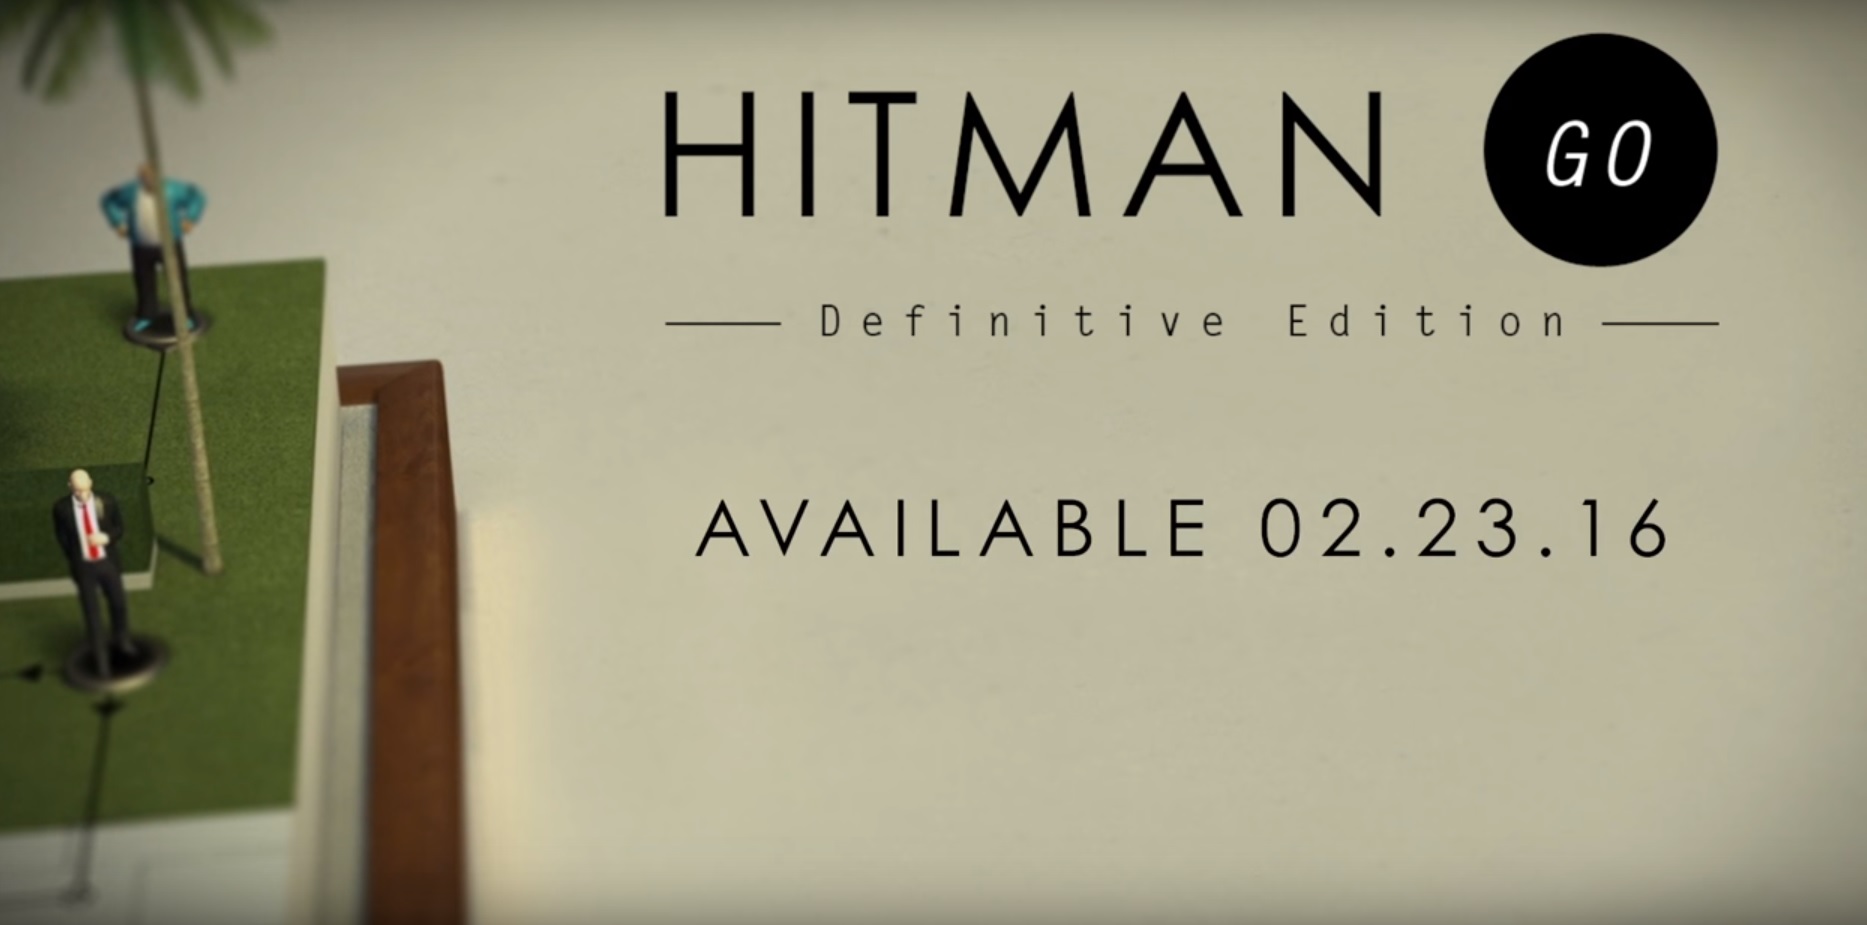 Hitman Go Definitive Edition - YouTube